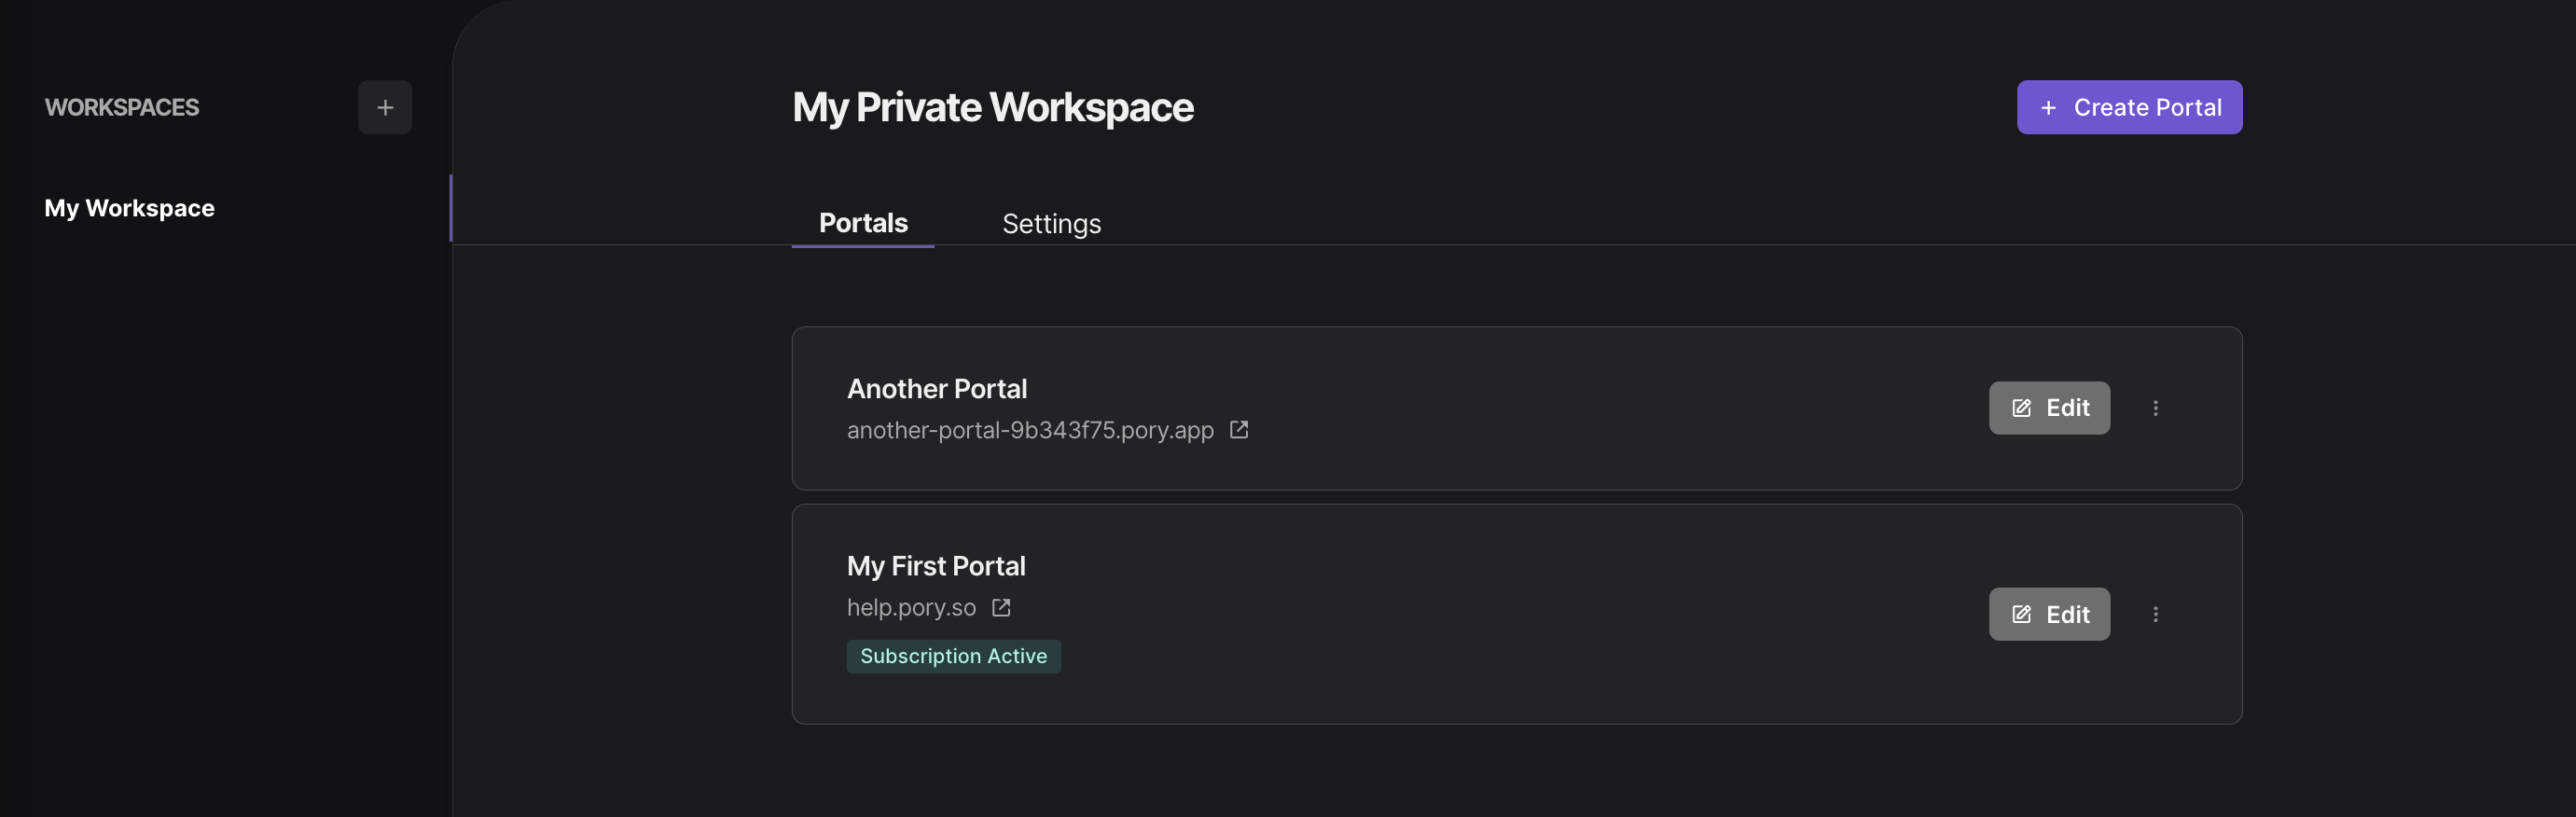 Private Workspace